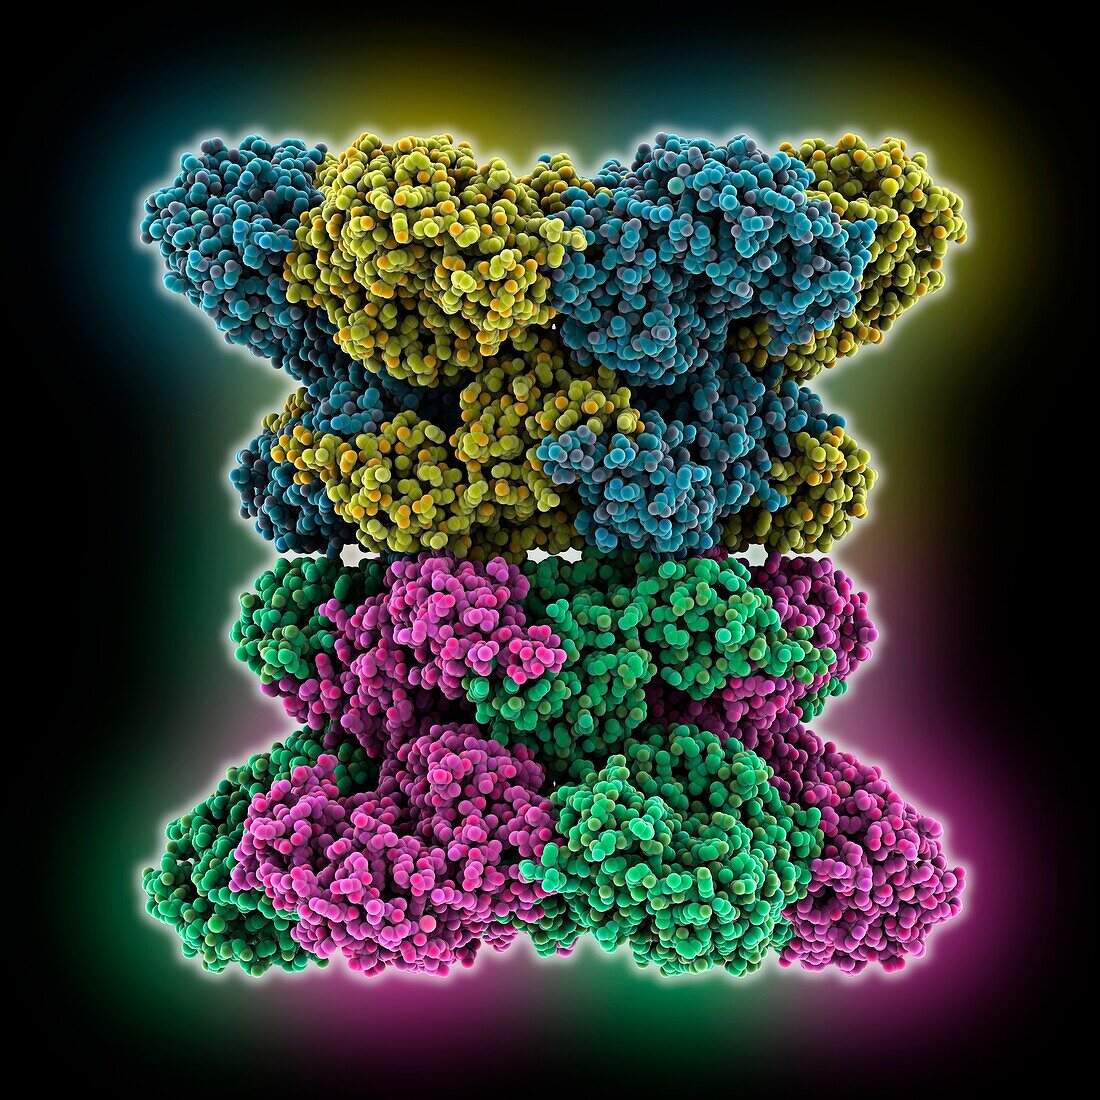 Human AAA ATPase p97, molecular model